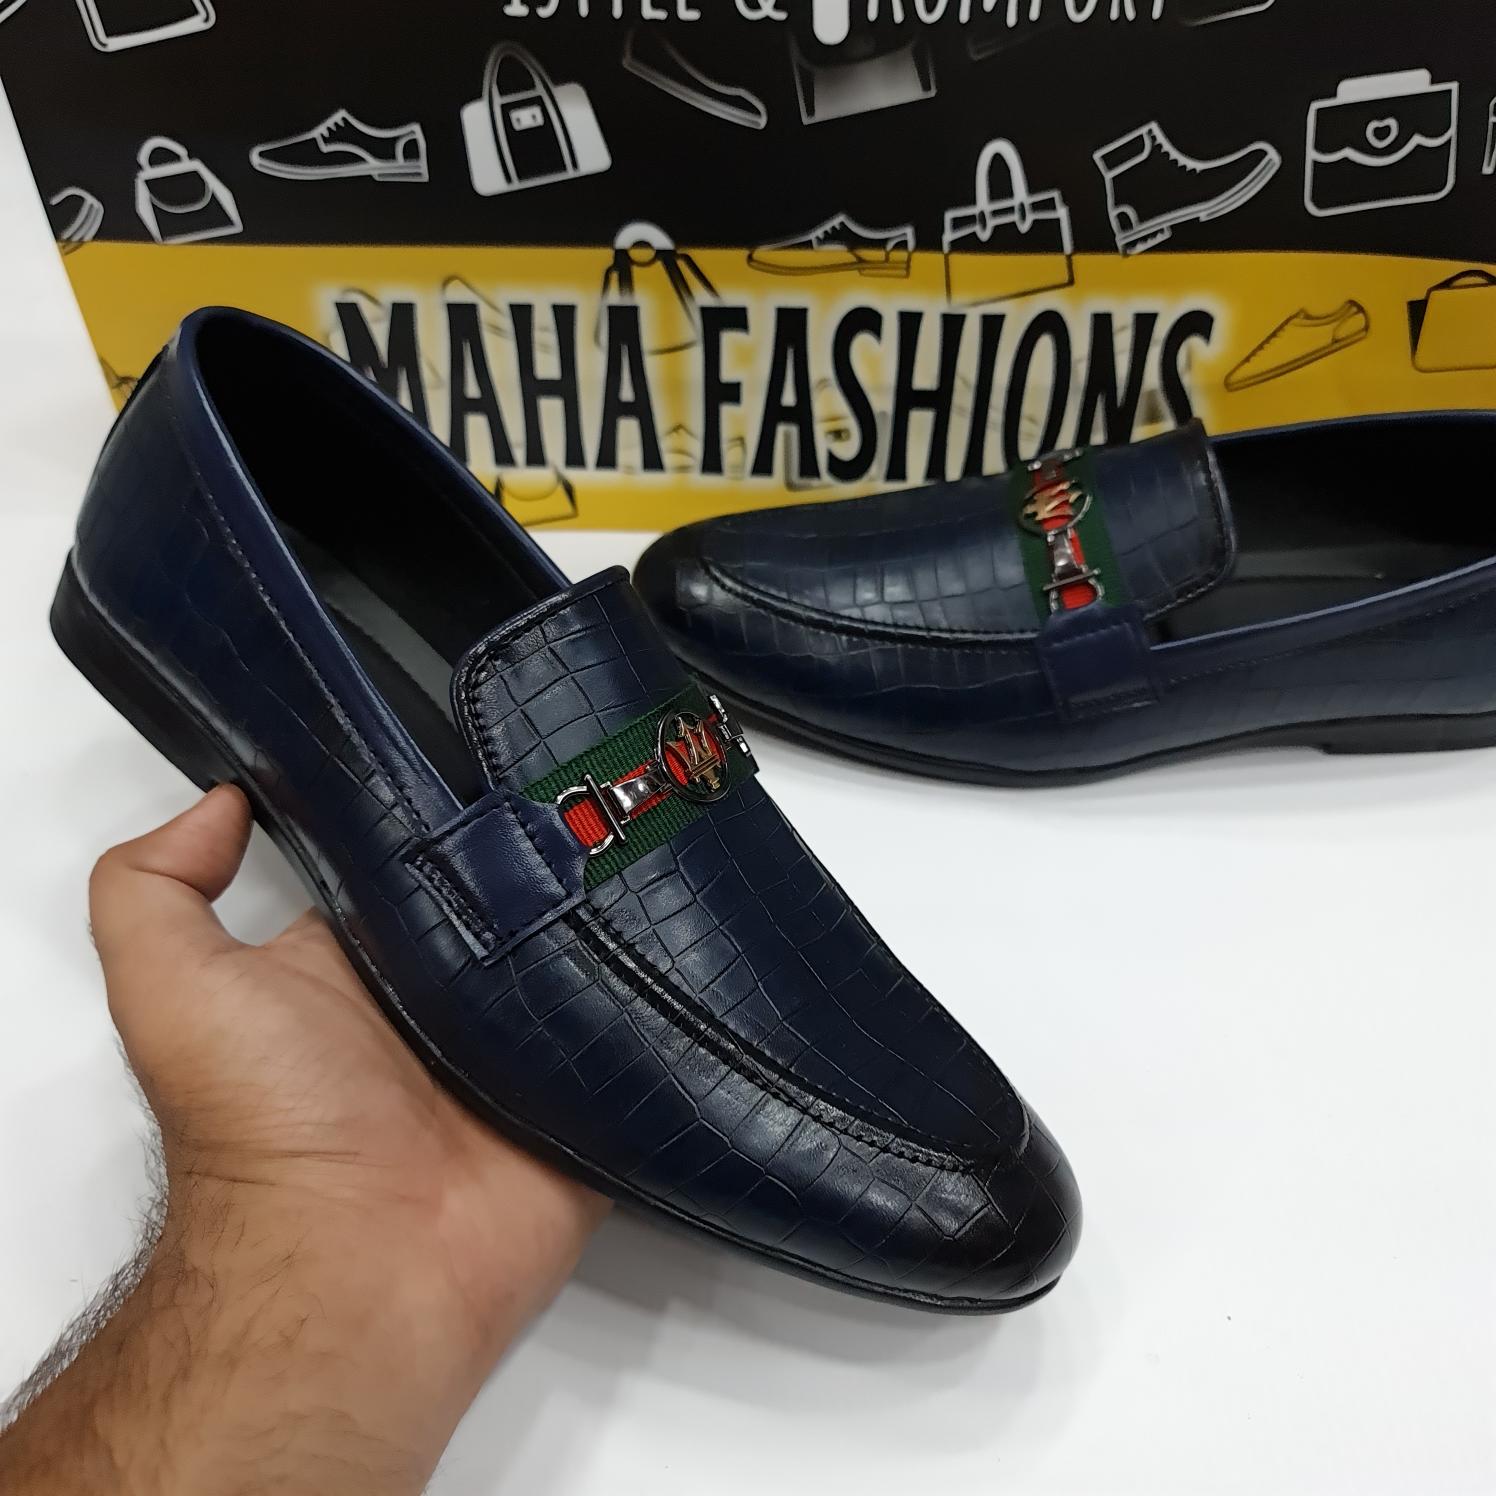 RM-008 - Maha fashions -  